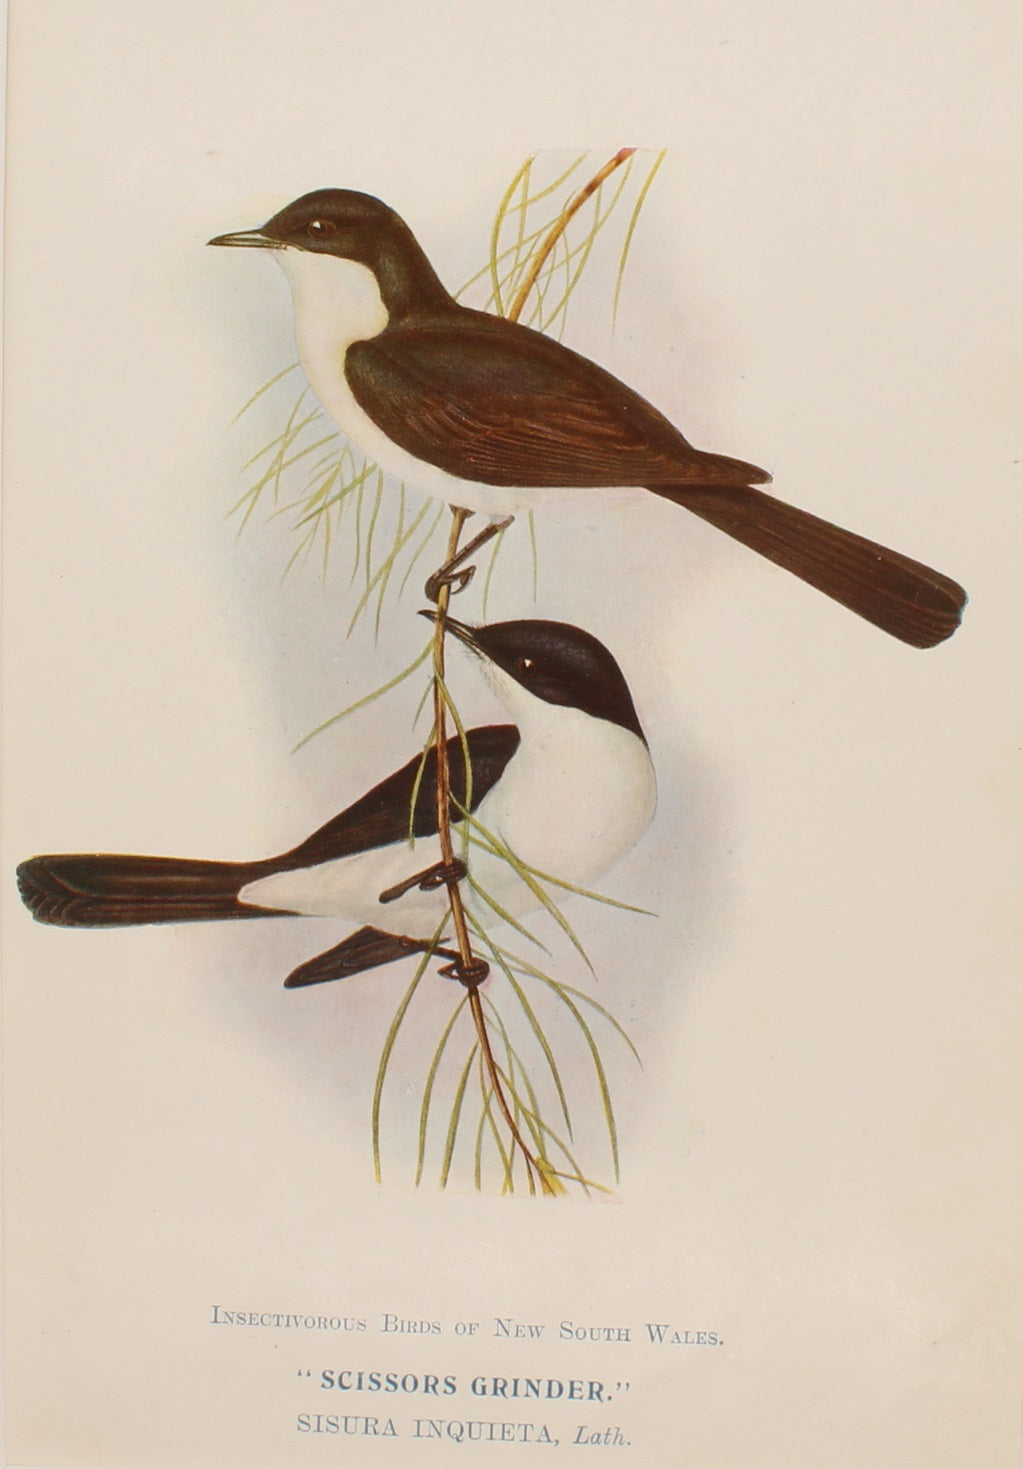 Bird, North Alfred John, Scissors Grinder, Insectivorous Birds of NSW,1921